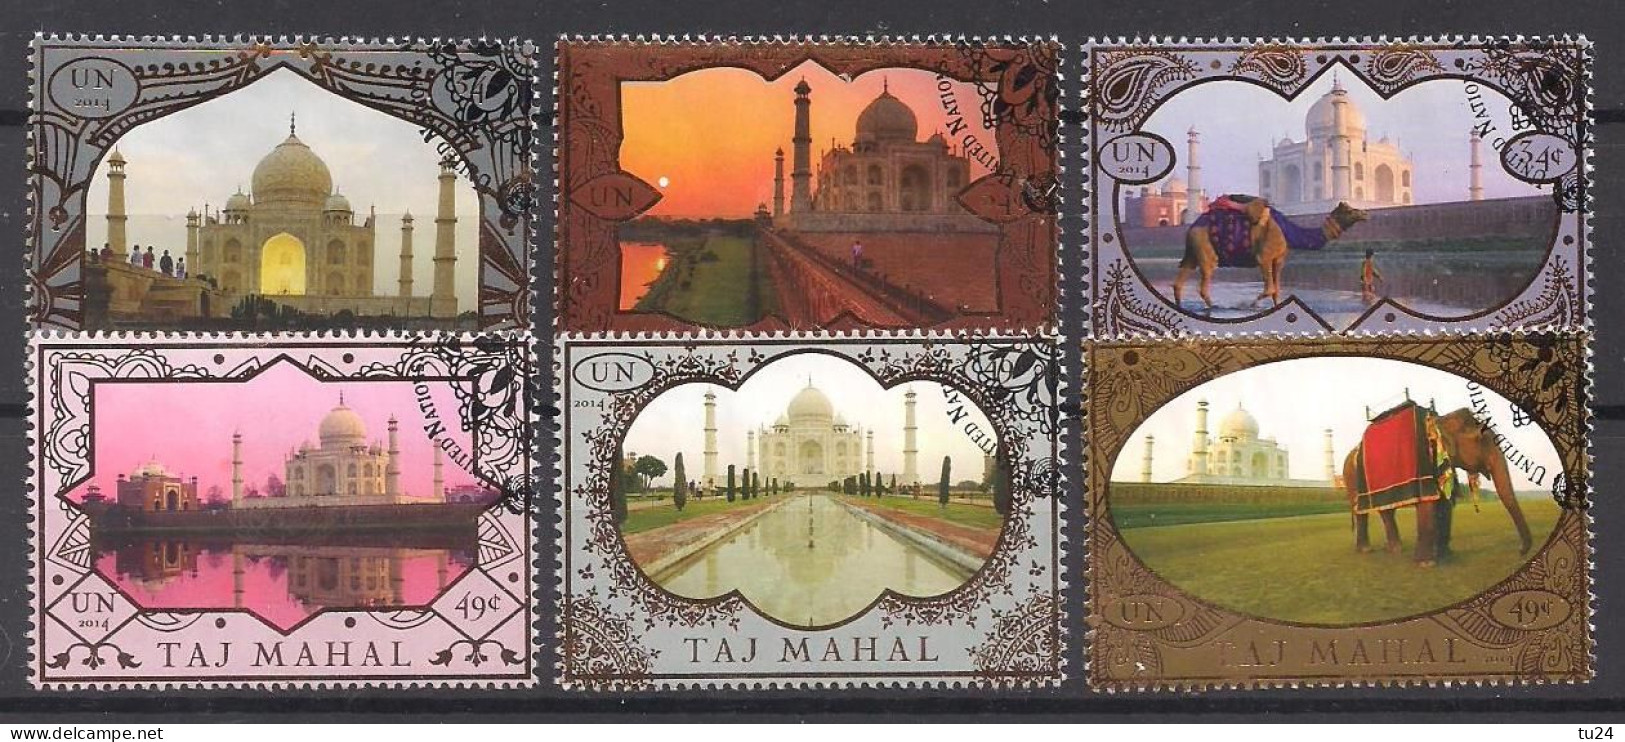 UNO  New York  (2014)  Mi.Nr.  1420 - 1425  Gest. / Used  (9hf06) Taj Mahal - Gebraucht